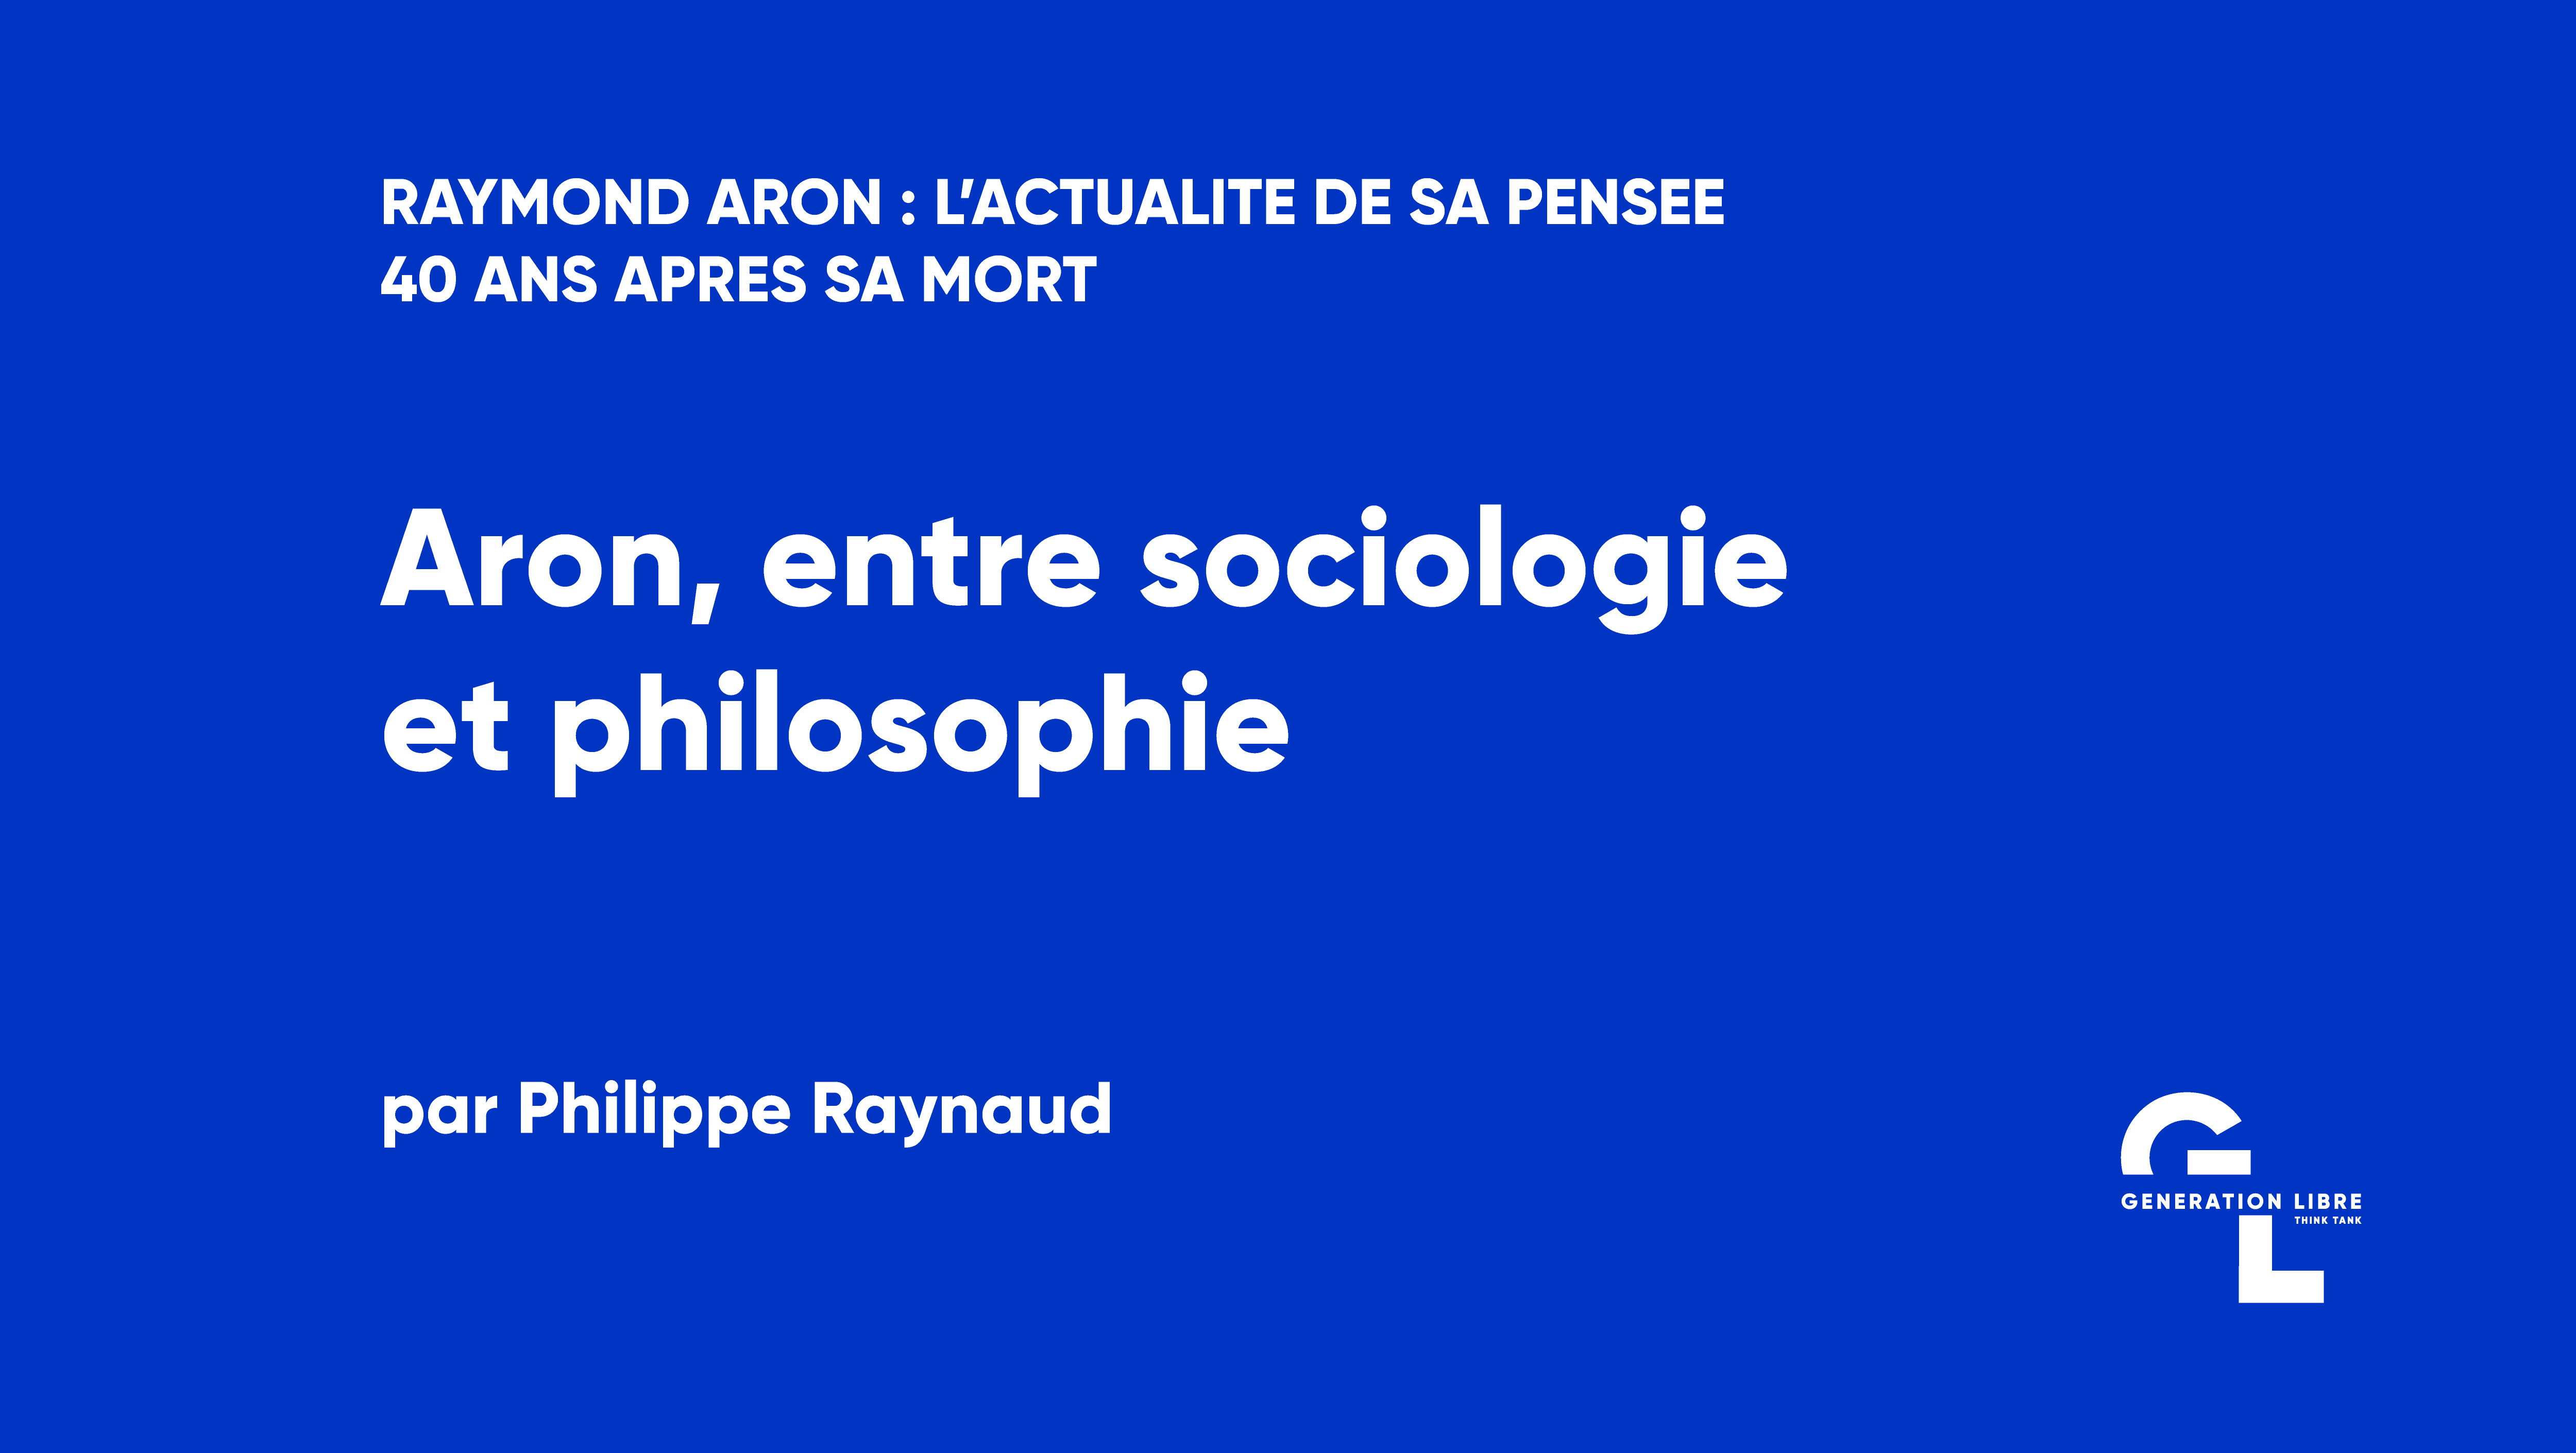 Raymond Aron, entre sociologie et philosophie